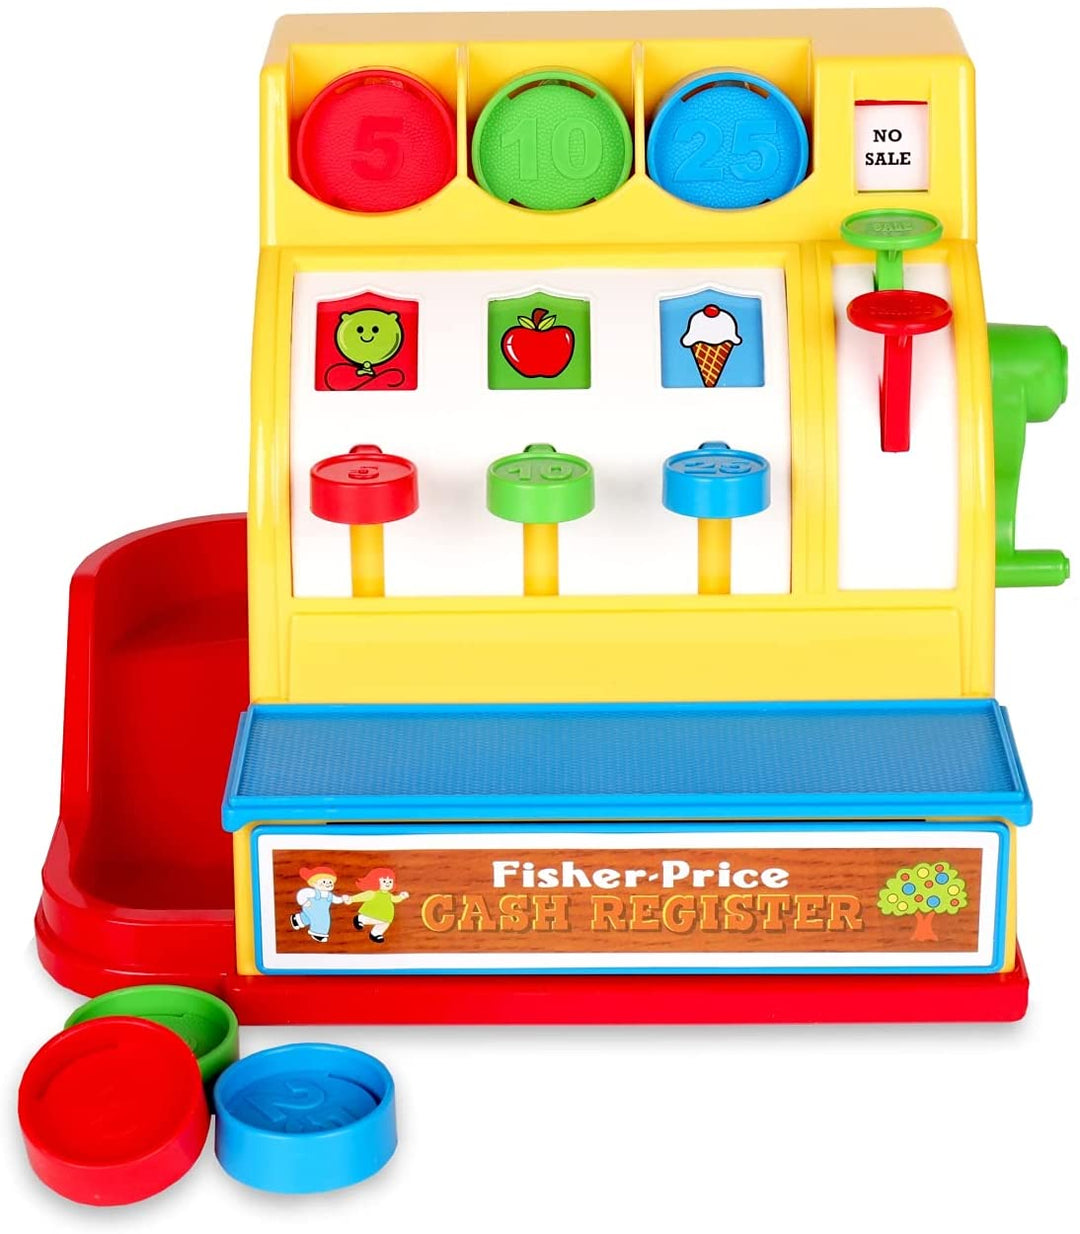 Fisher Price Classics 2073 Registrierkassenspielzeug